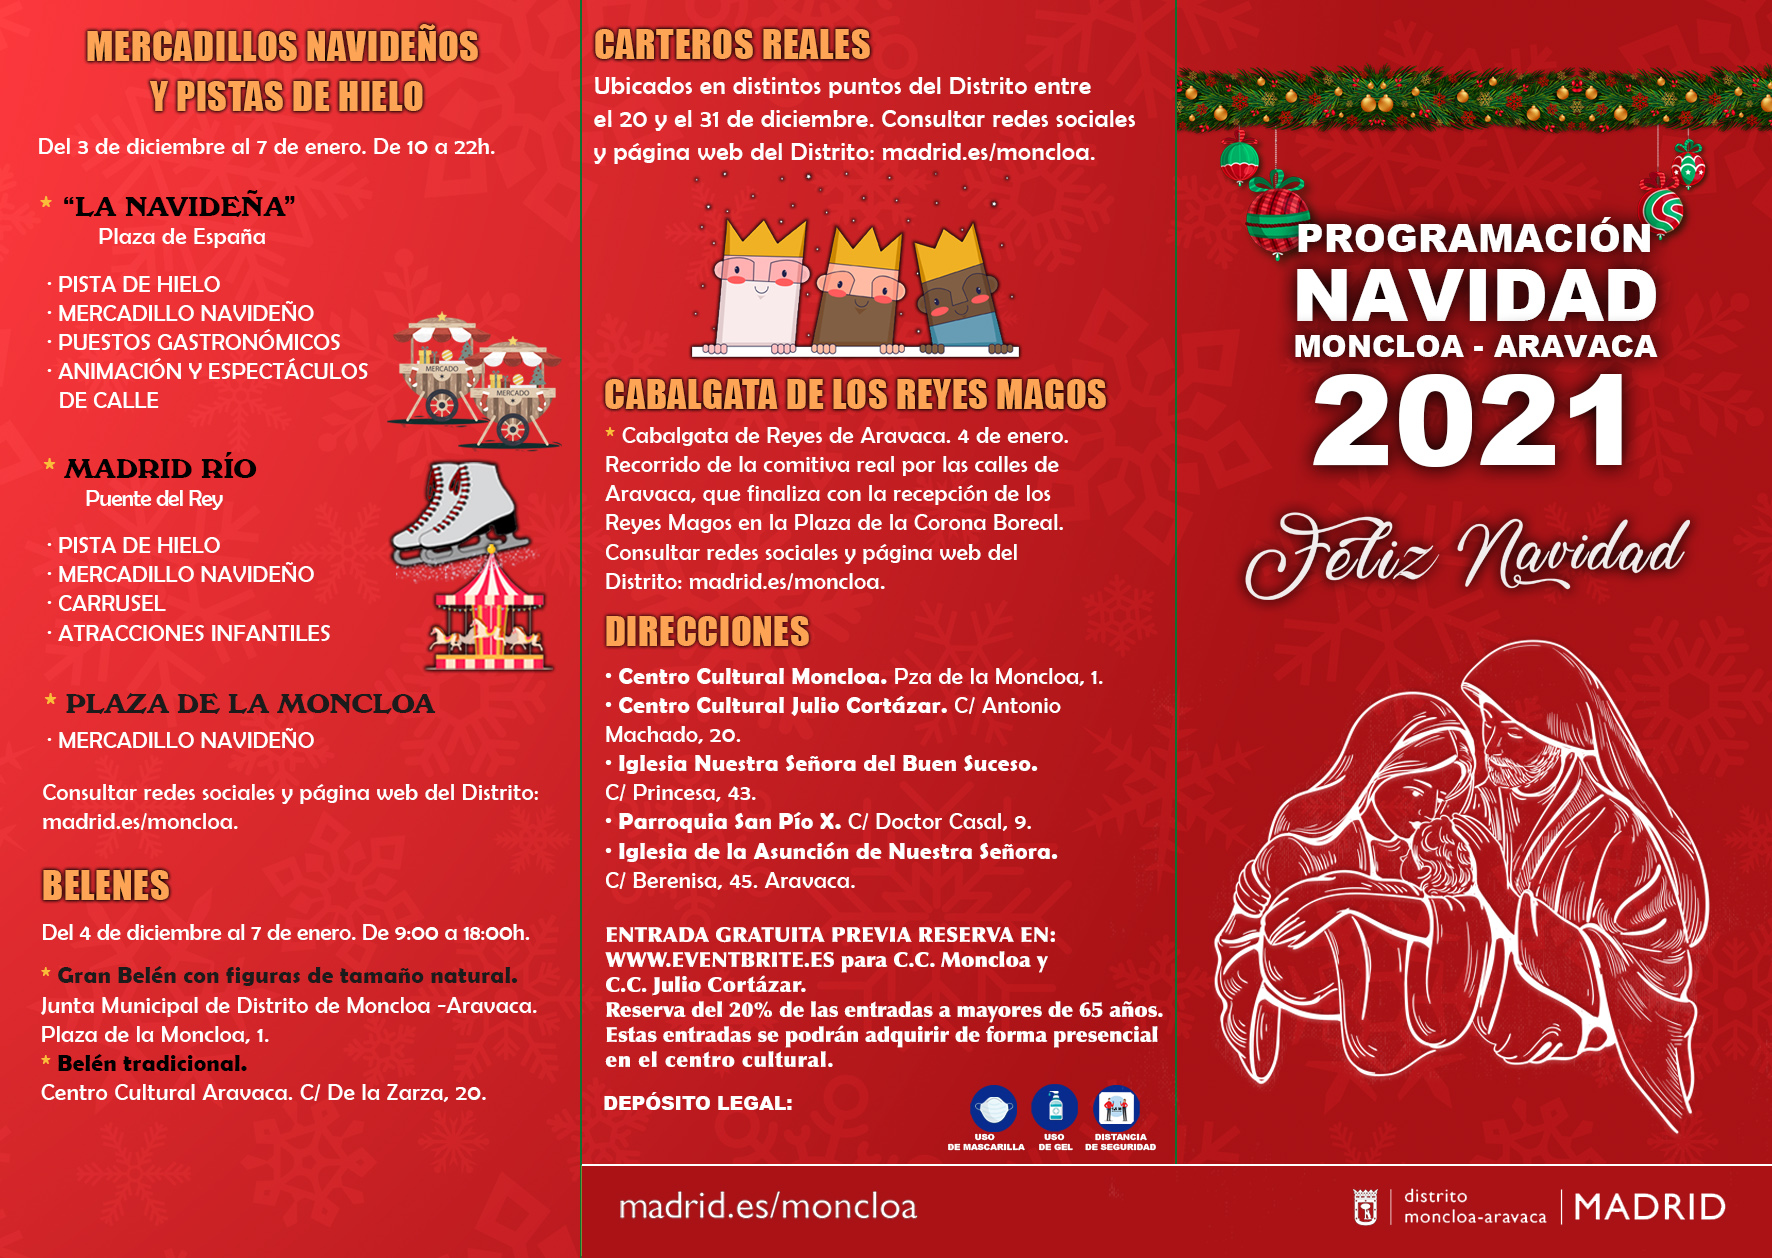 Programa Navidad Moncloa-Aravaca